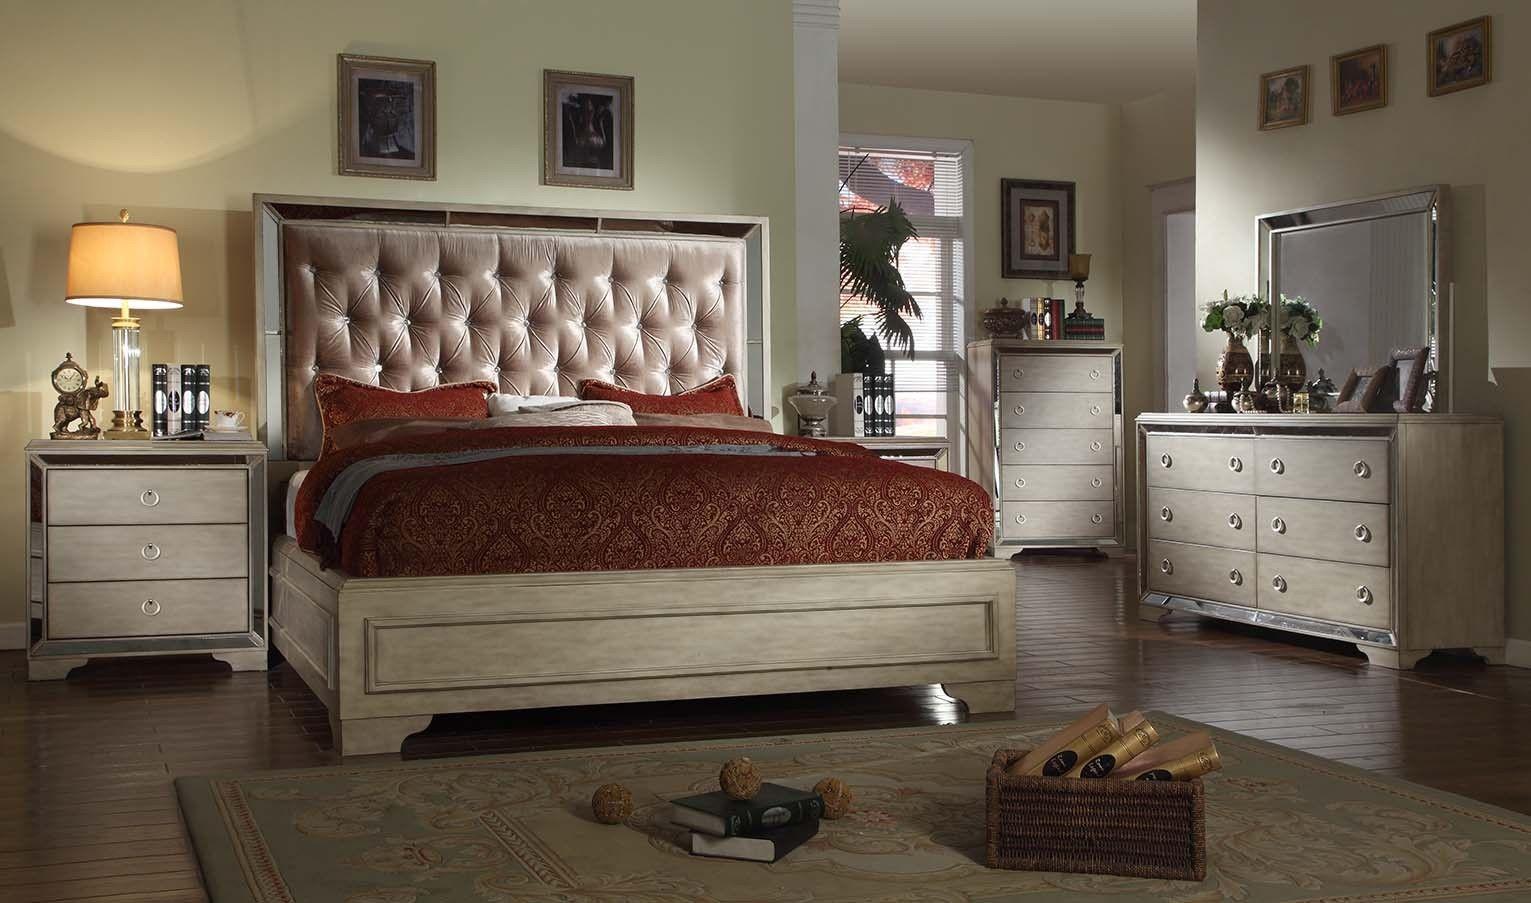 

    
Mcferran B9805 Imperial Premium Leather Queen Size Bedroom Set 3 Pcs
